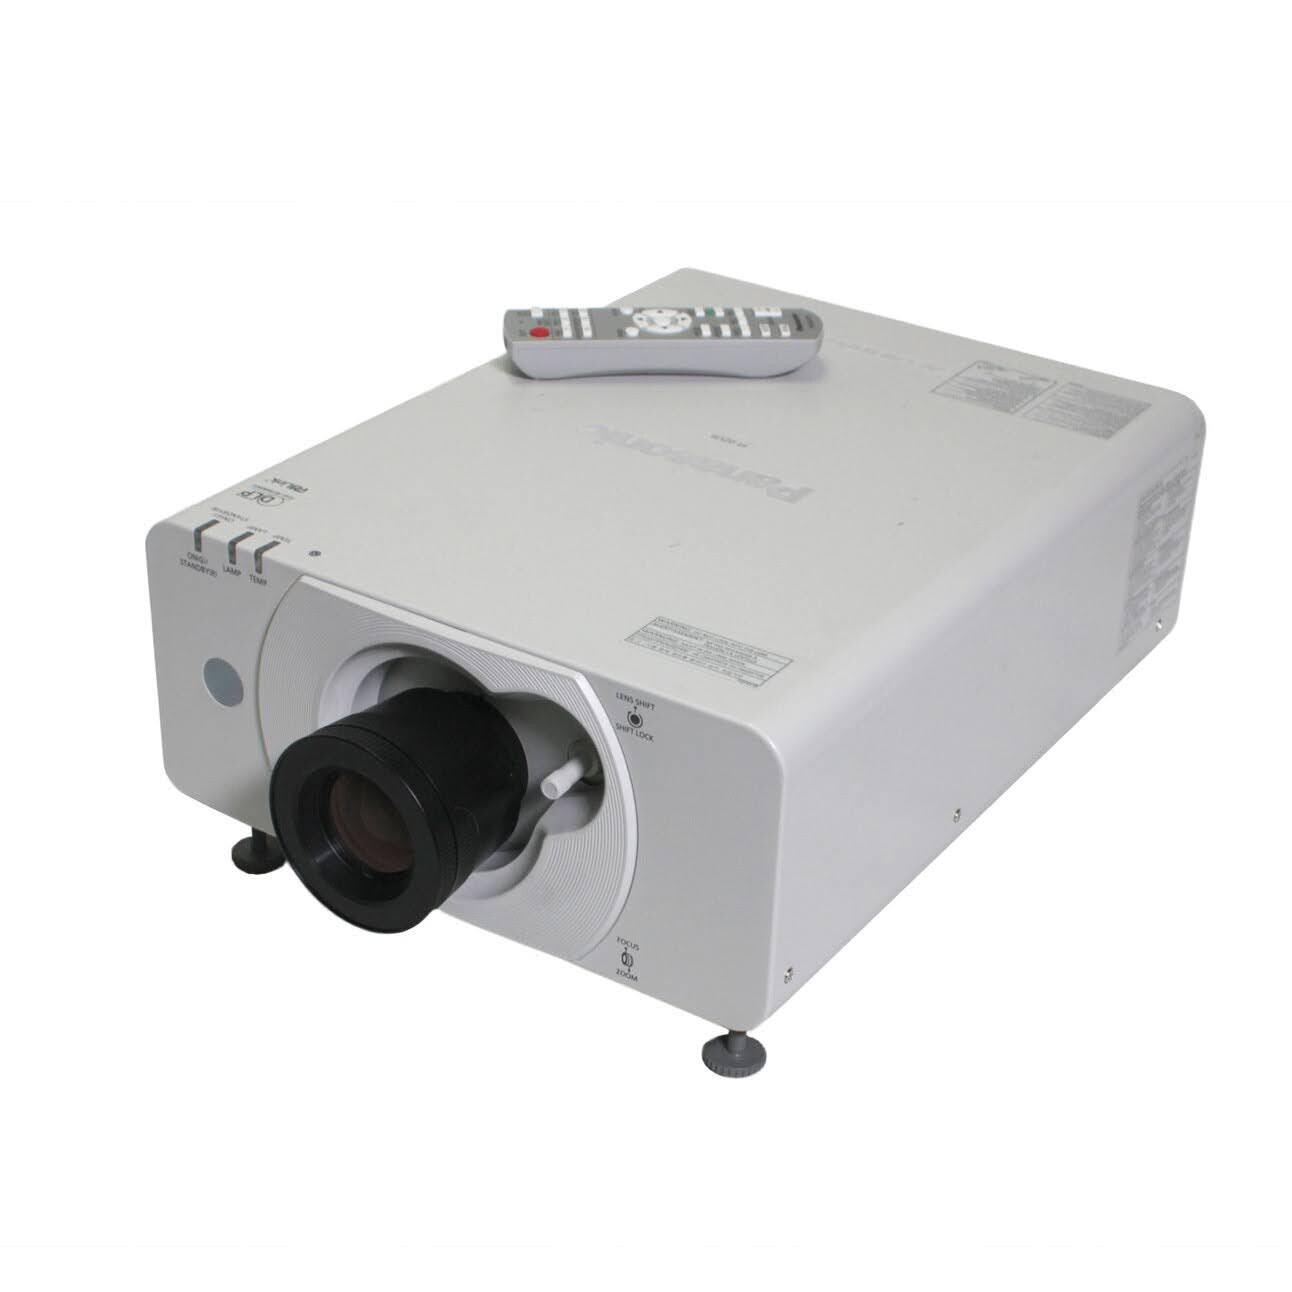 4000lumens Full HD 1920x1200 projector rentals